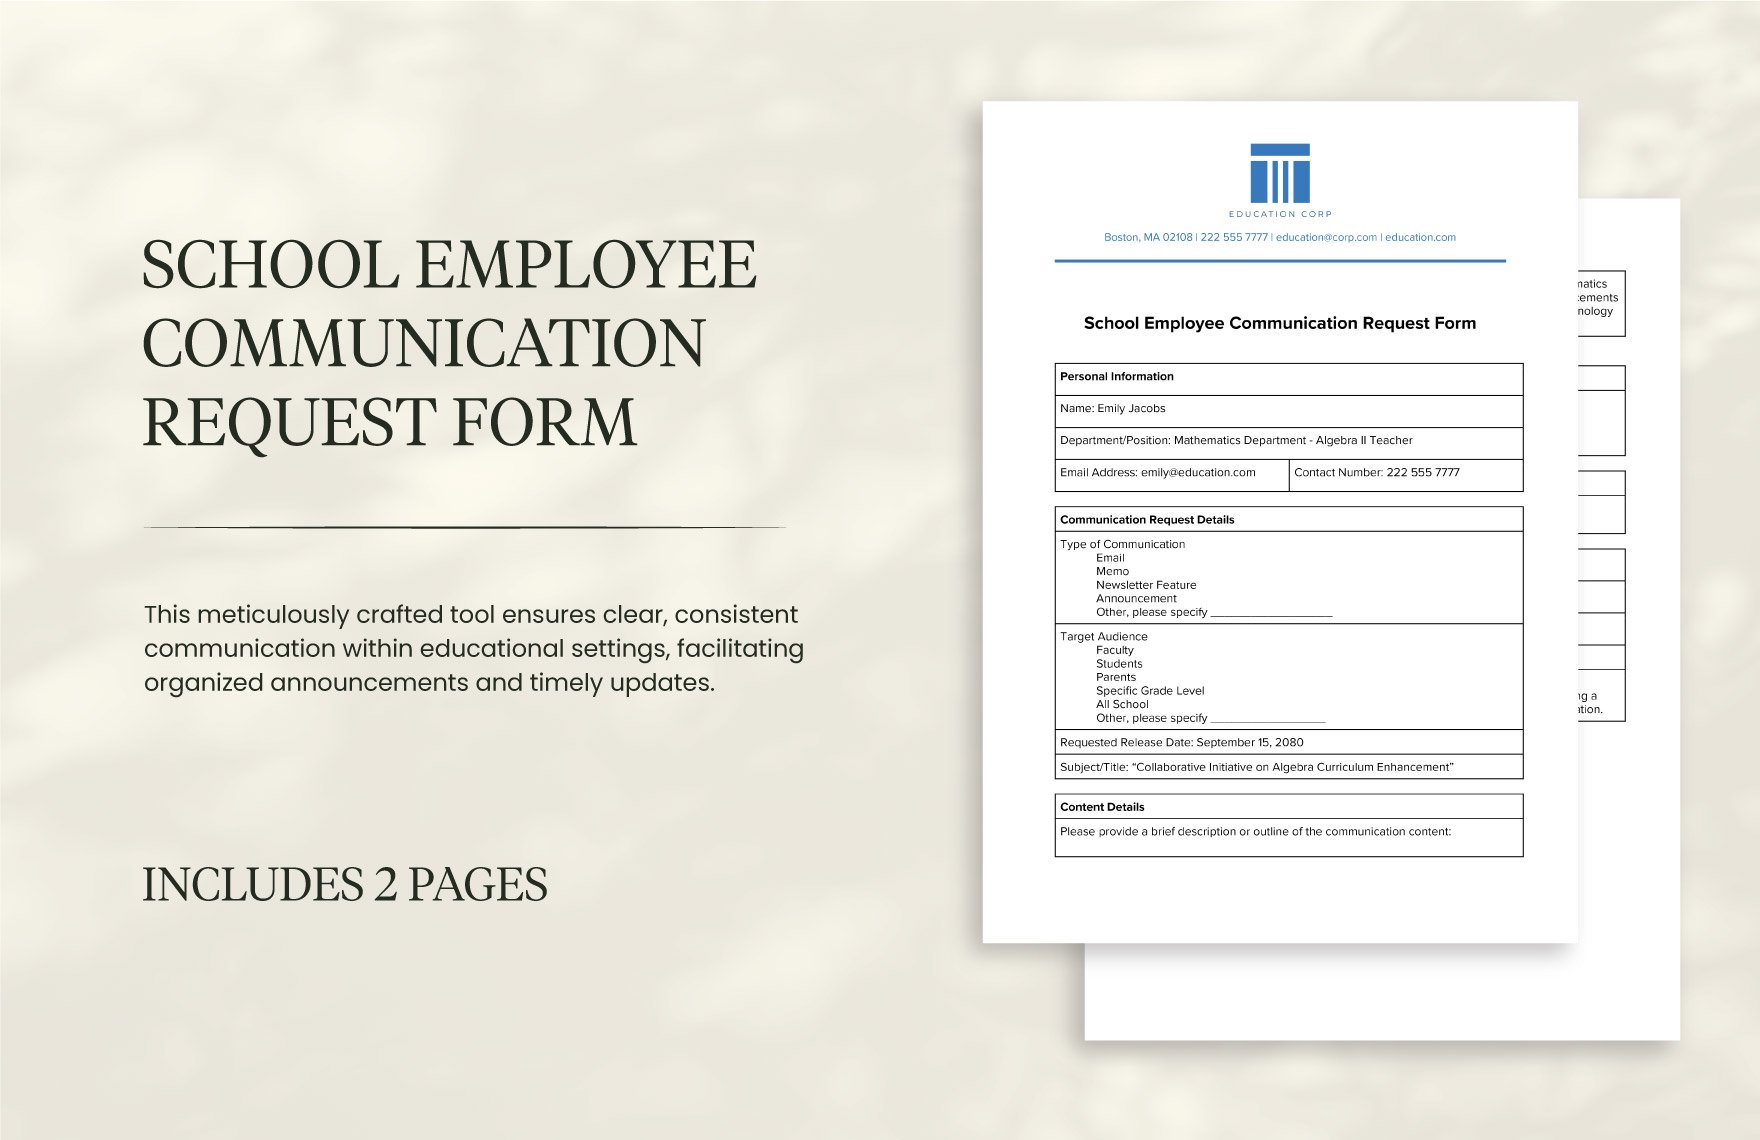 School Employee Communication Request Form in Word, Google Docs, PDF